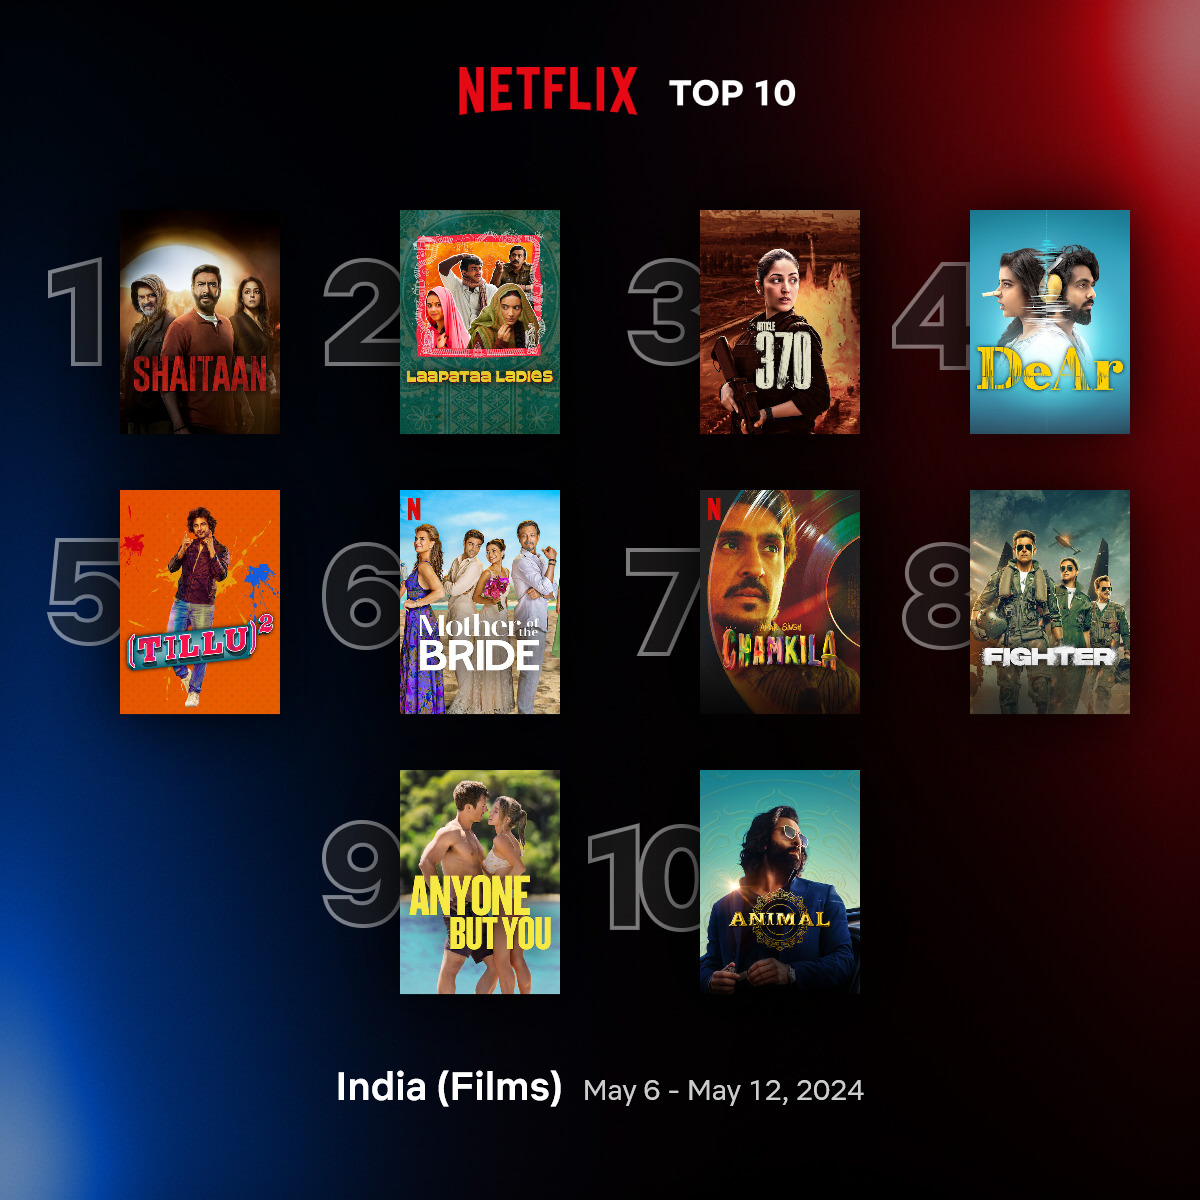 Top 10 films on #Netflix India (6-12 May)  

1.#Shaitaan
2.#LaapataaLadies
3.#Article370
5.#TilluSquare
7.#AmarSinghChamkila
8.#Fighter
10.#Animal